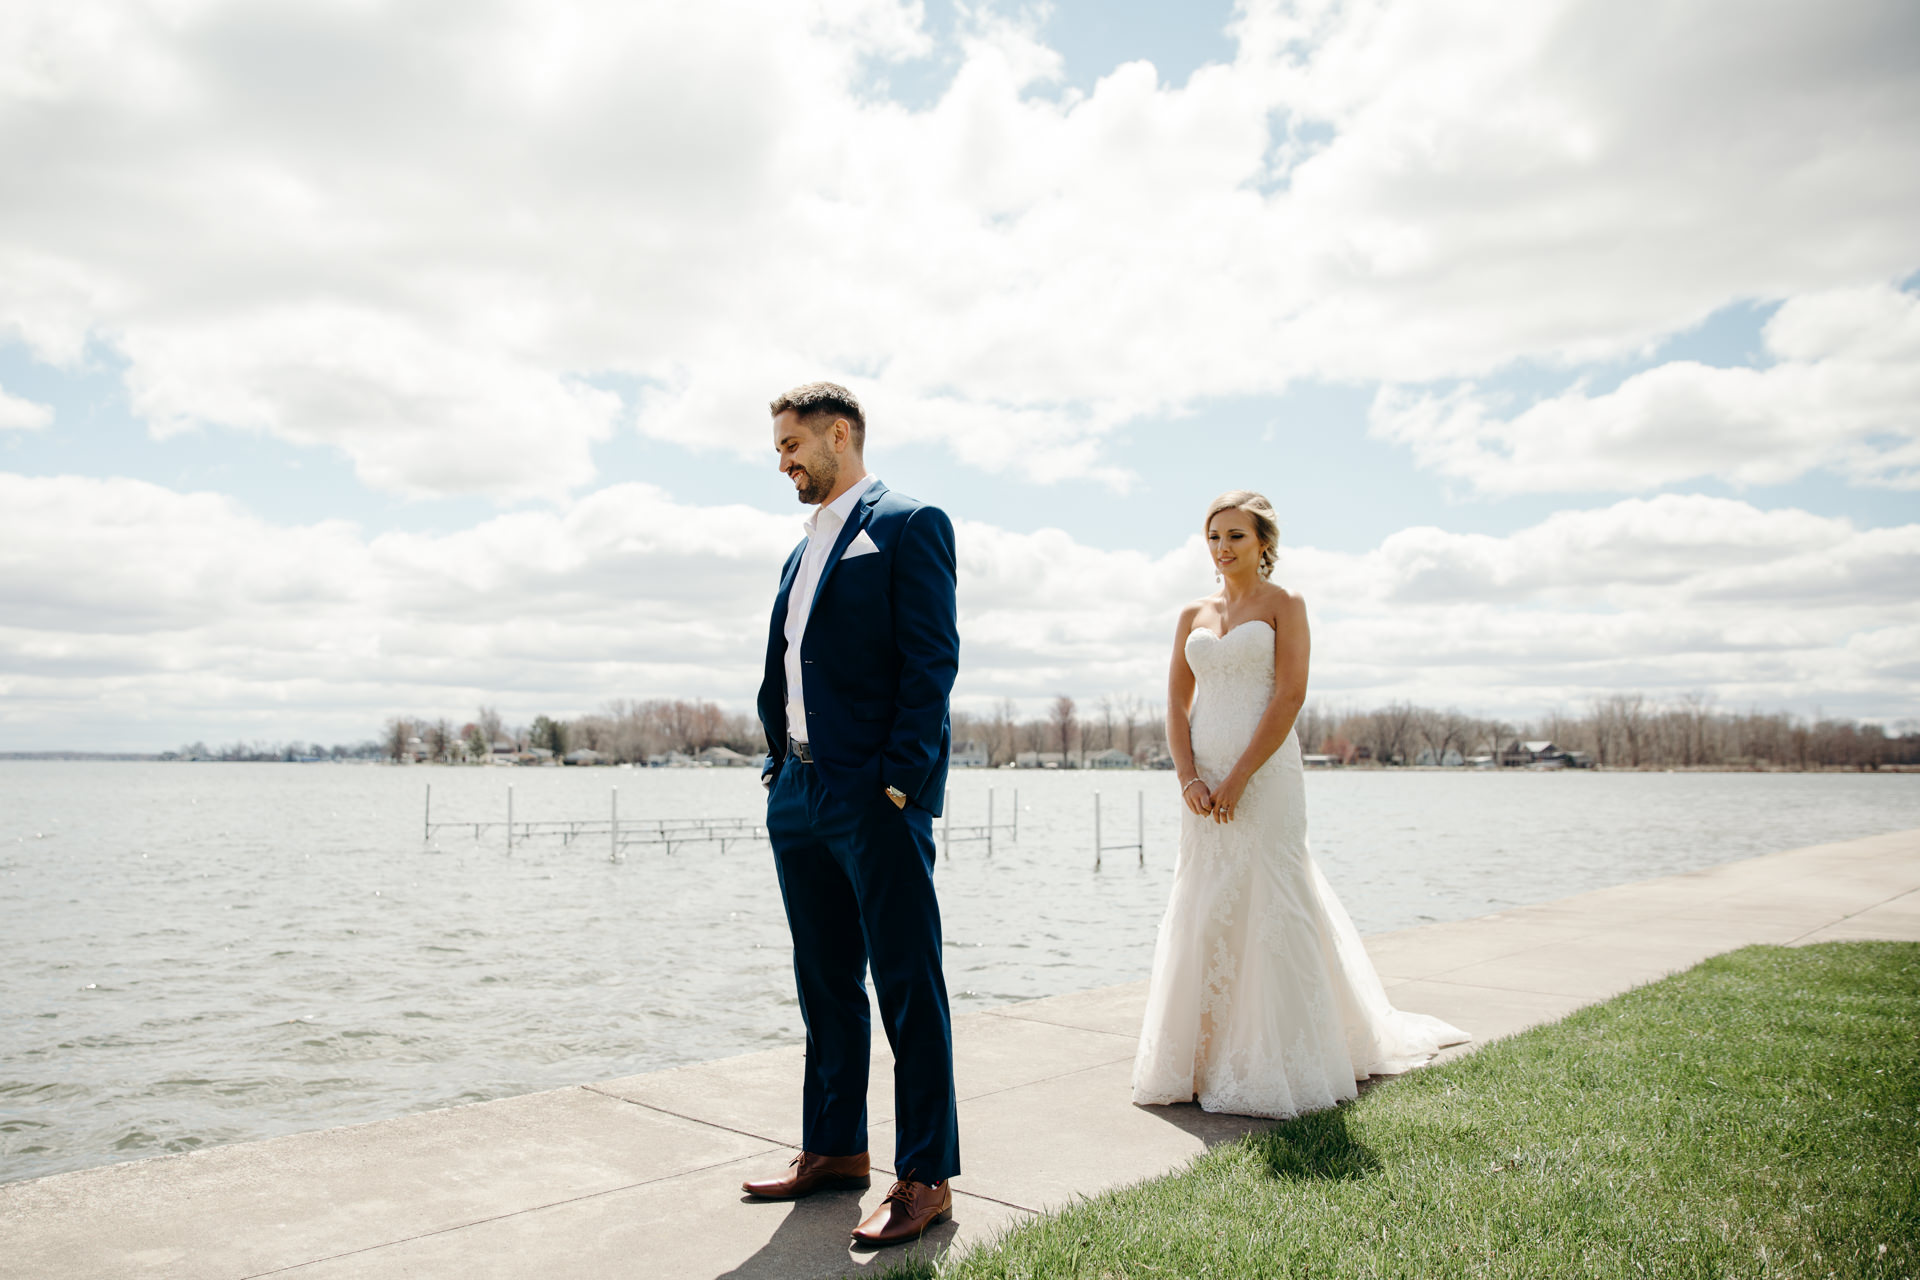 Grant Beachy wedding portrait fitness marketing photographer goshen elkhart south bend chicago-011.jpg